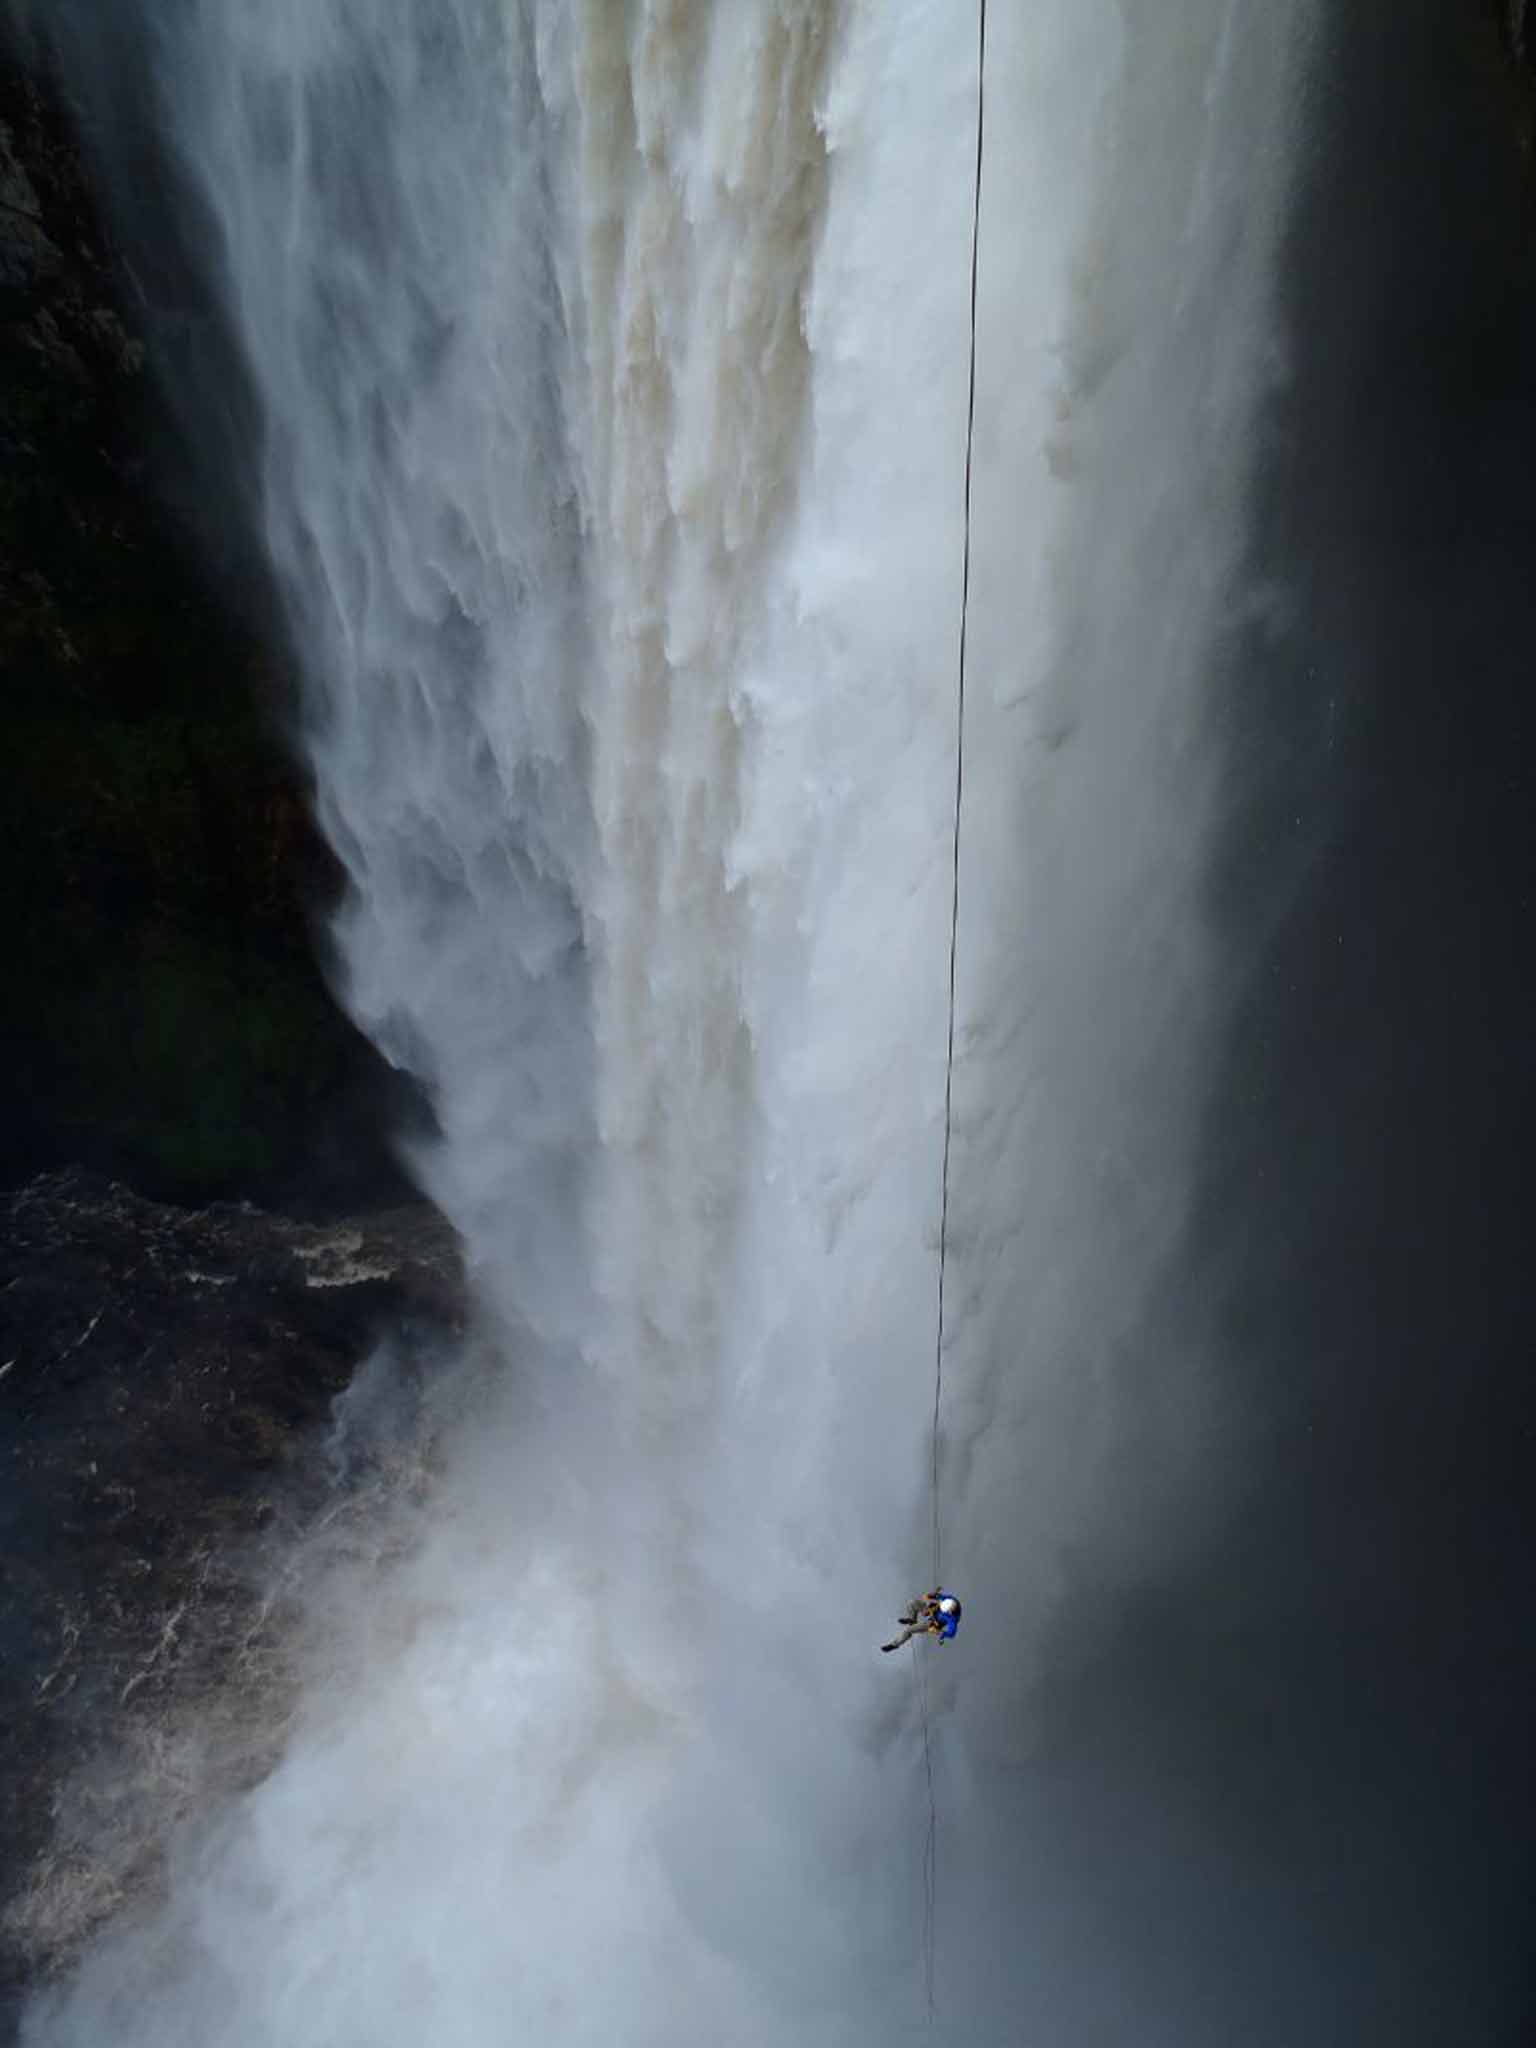 Keith Partridge abseiling down the Kaieteur Falls in Guyana